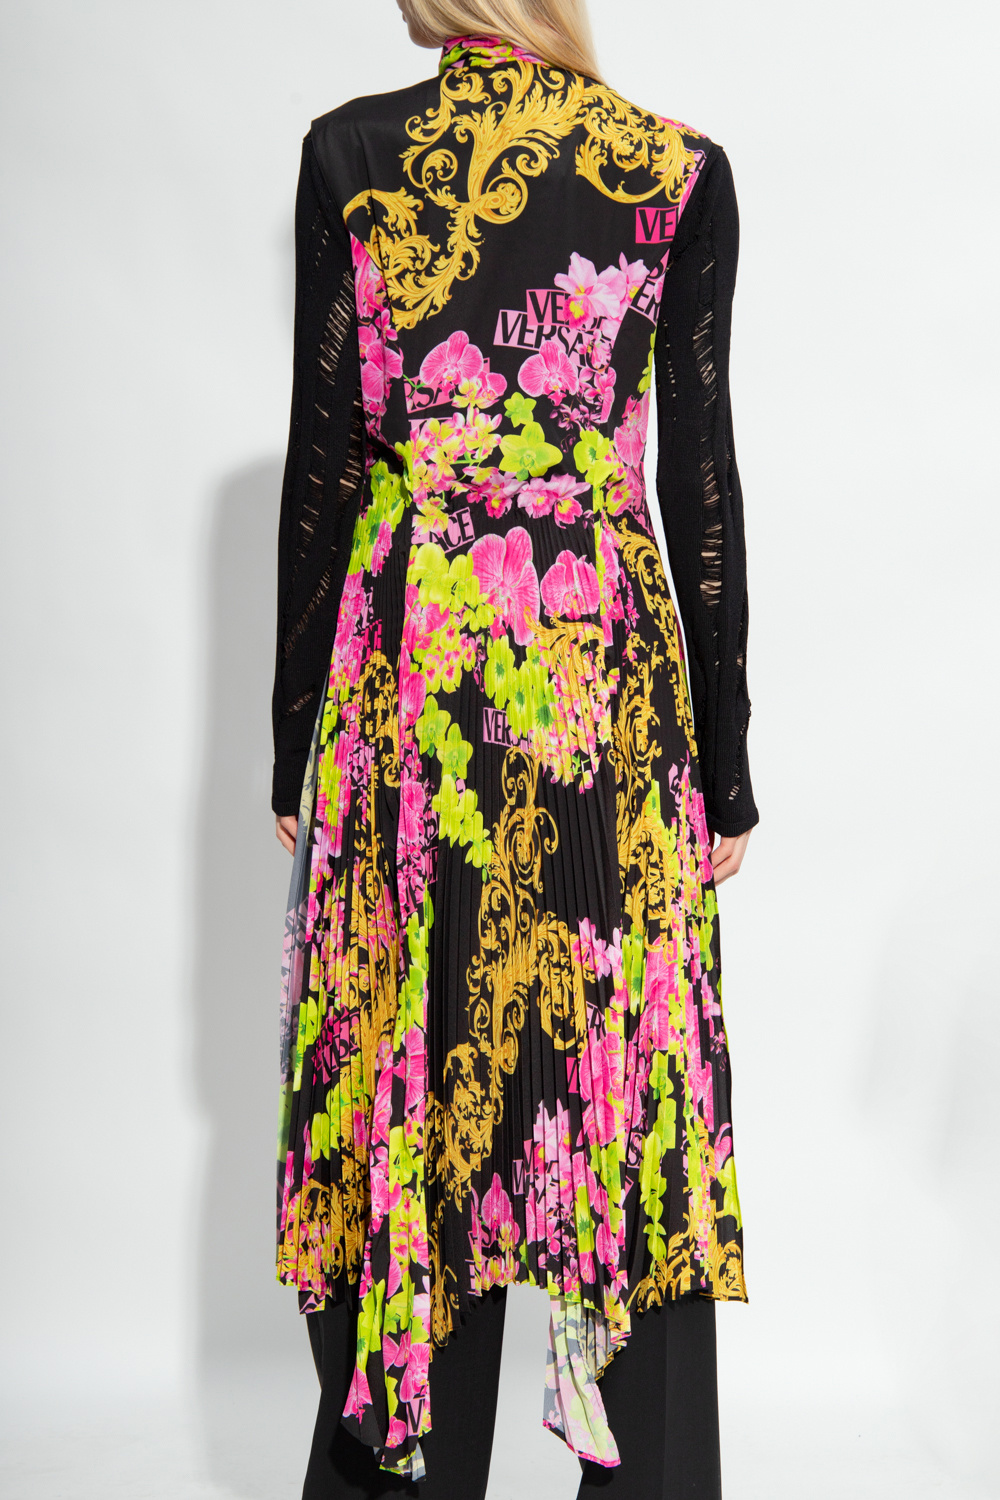 Versace Patterned sleeveless dress